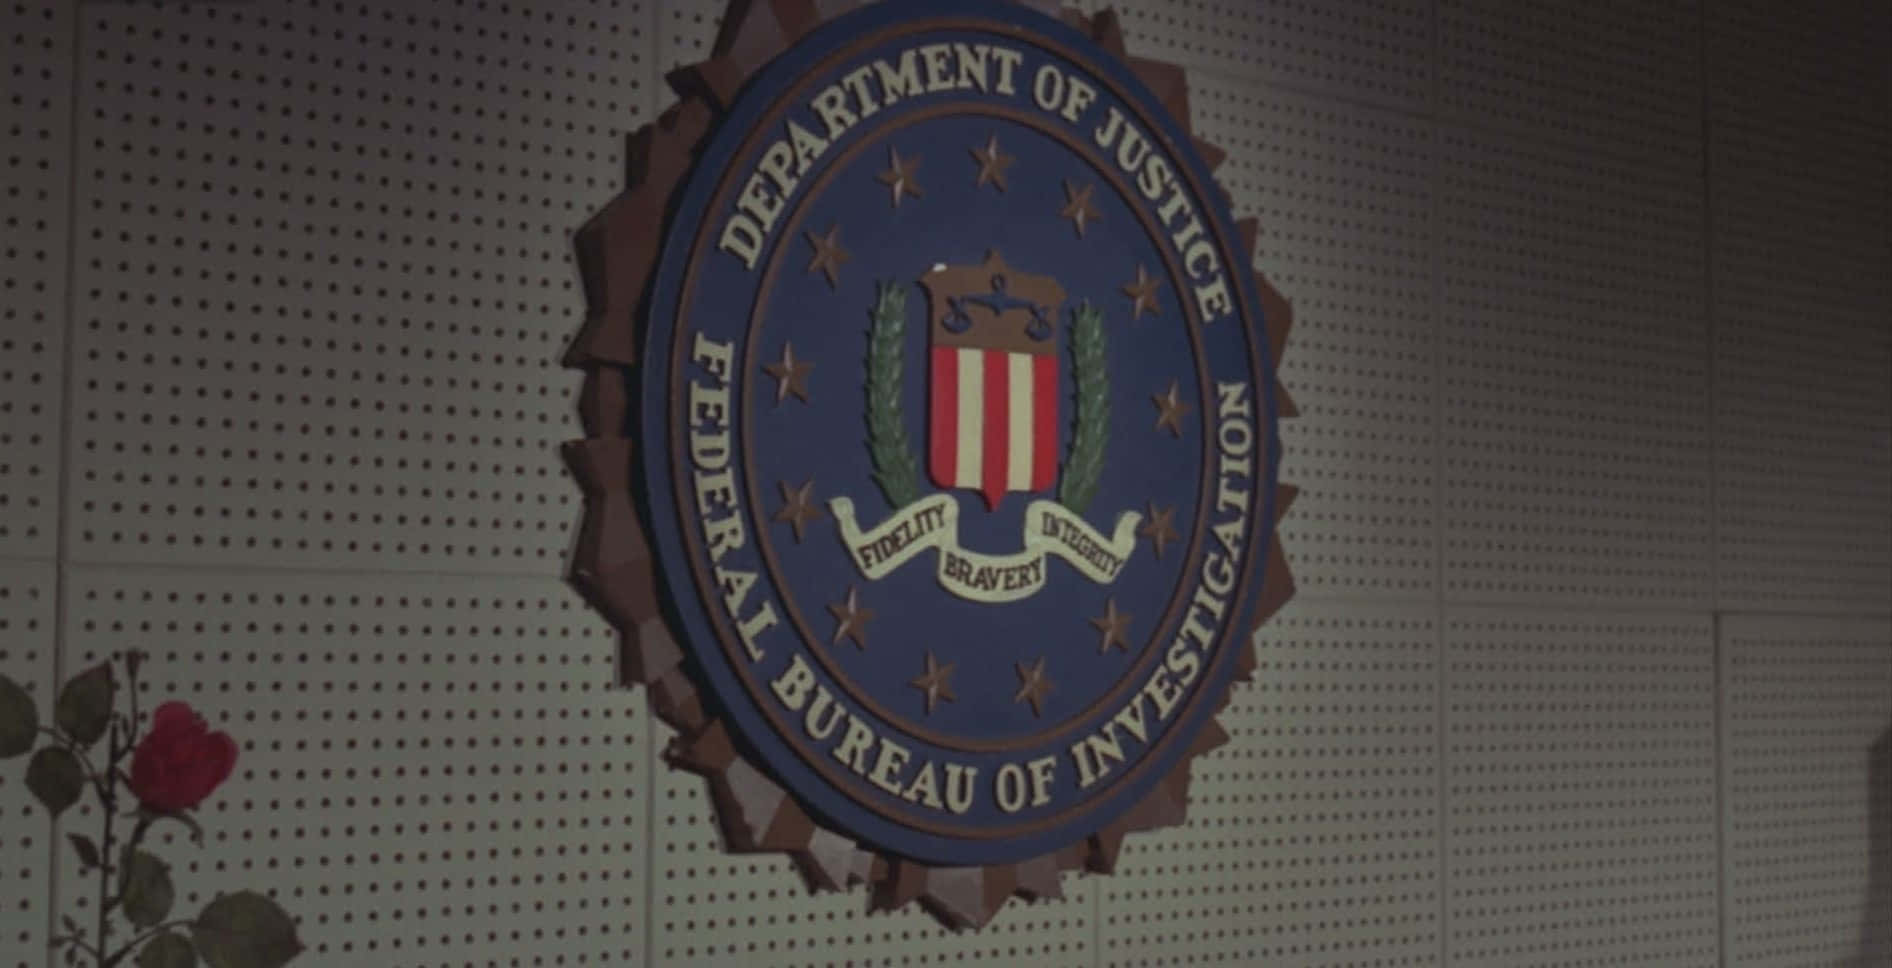 Caption: FBI Emblem on a Dark Background